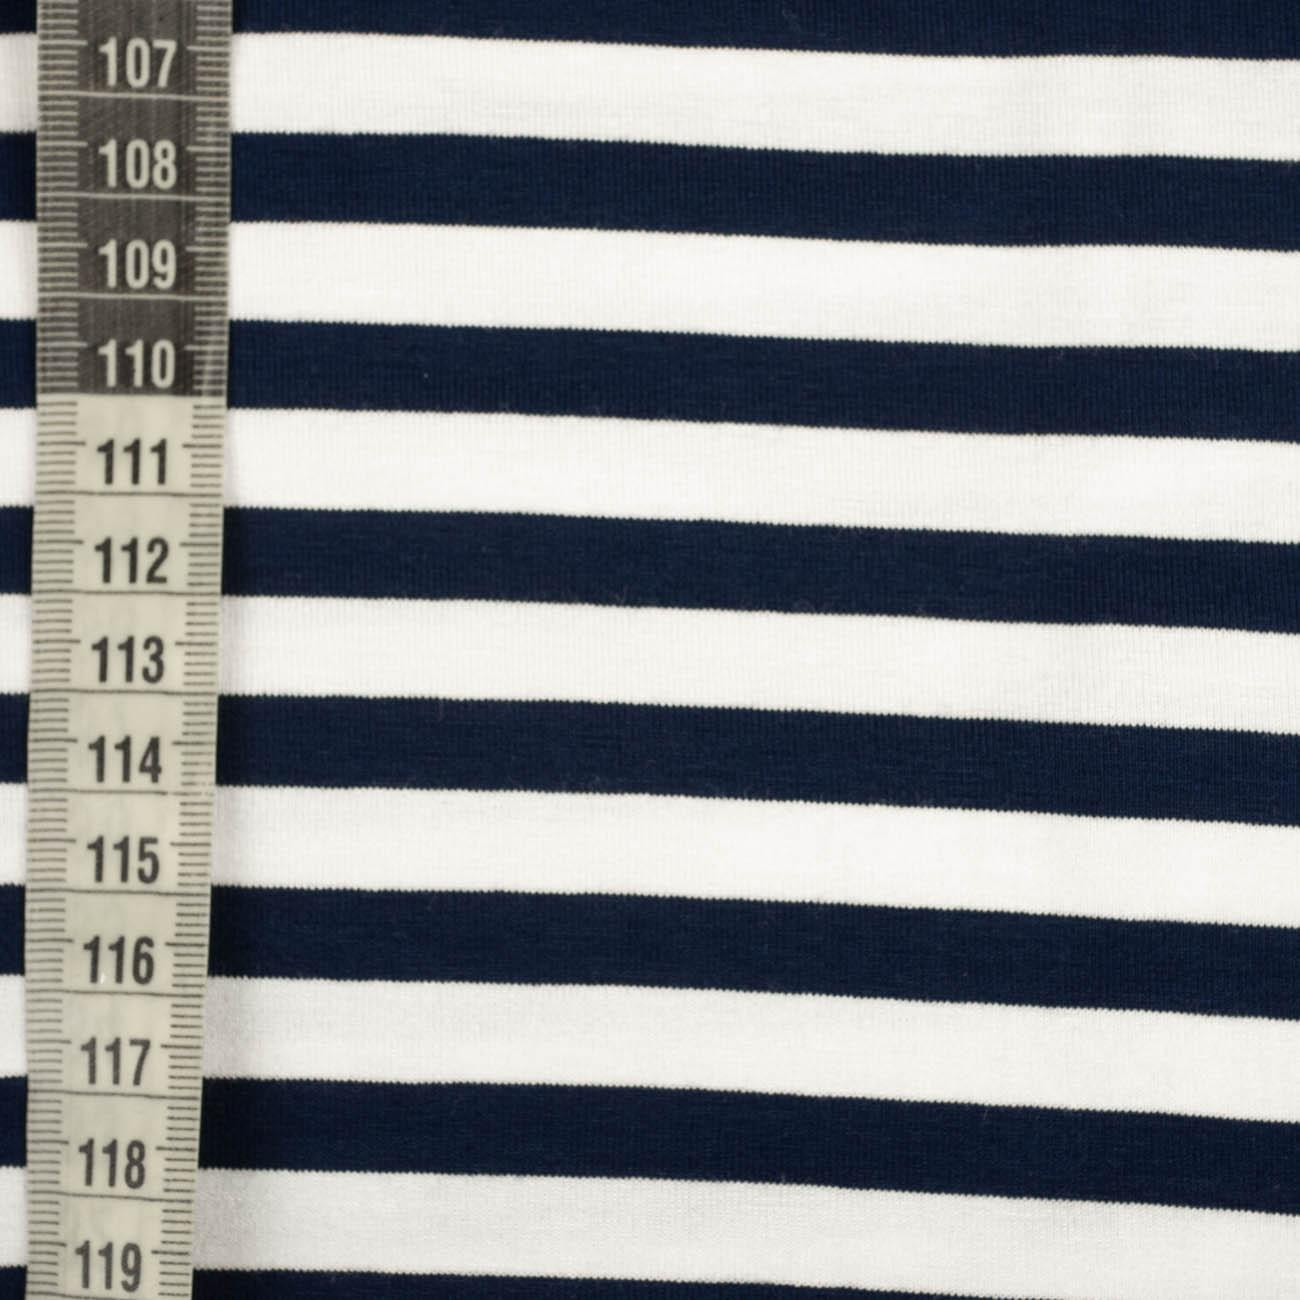 STRIPES DARK BLUE / WHITE 1,0cm x 1,0cm - Viscose jersey